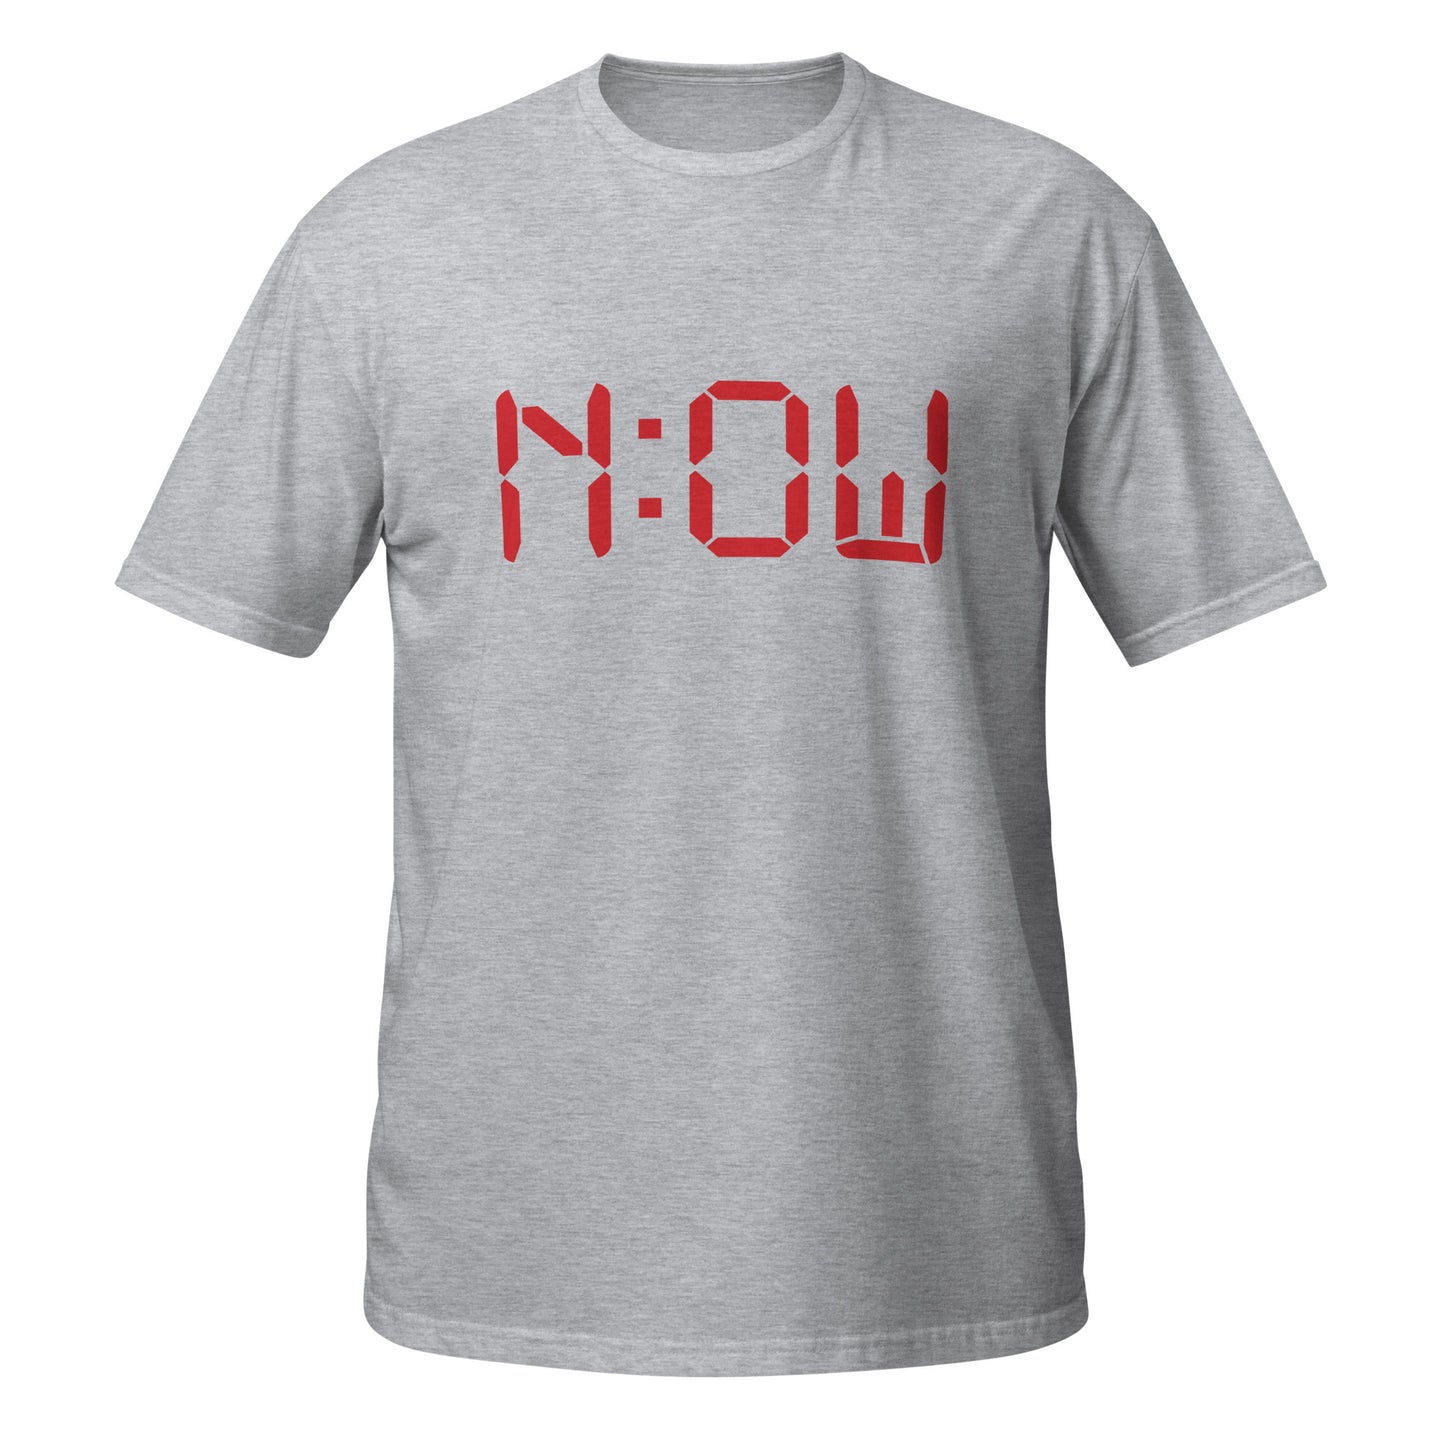 "Now" Unisex T-Shirt